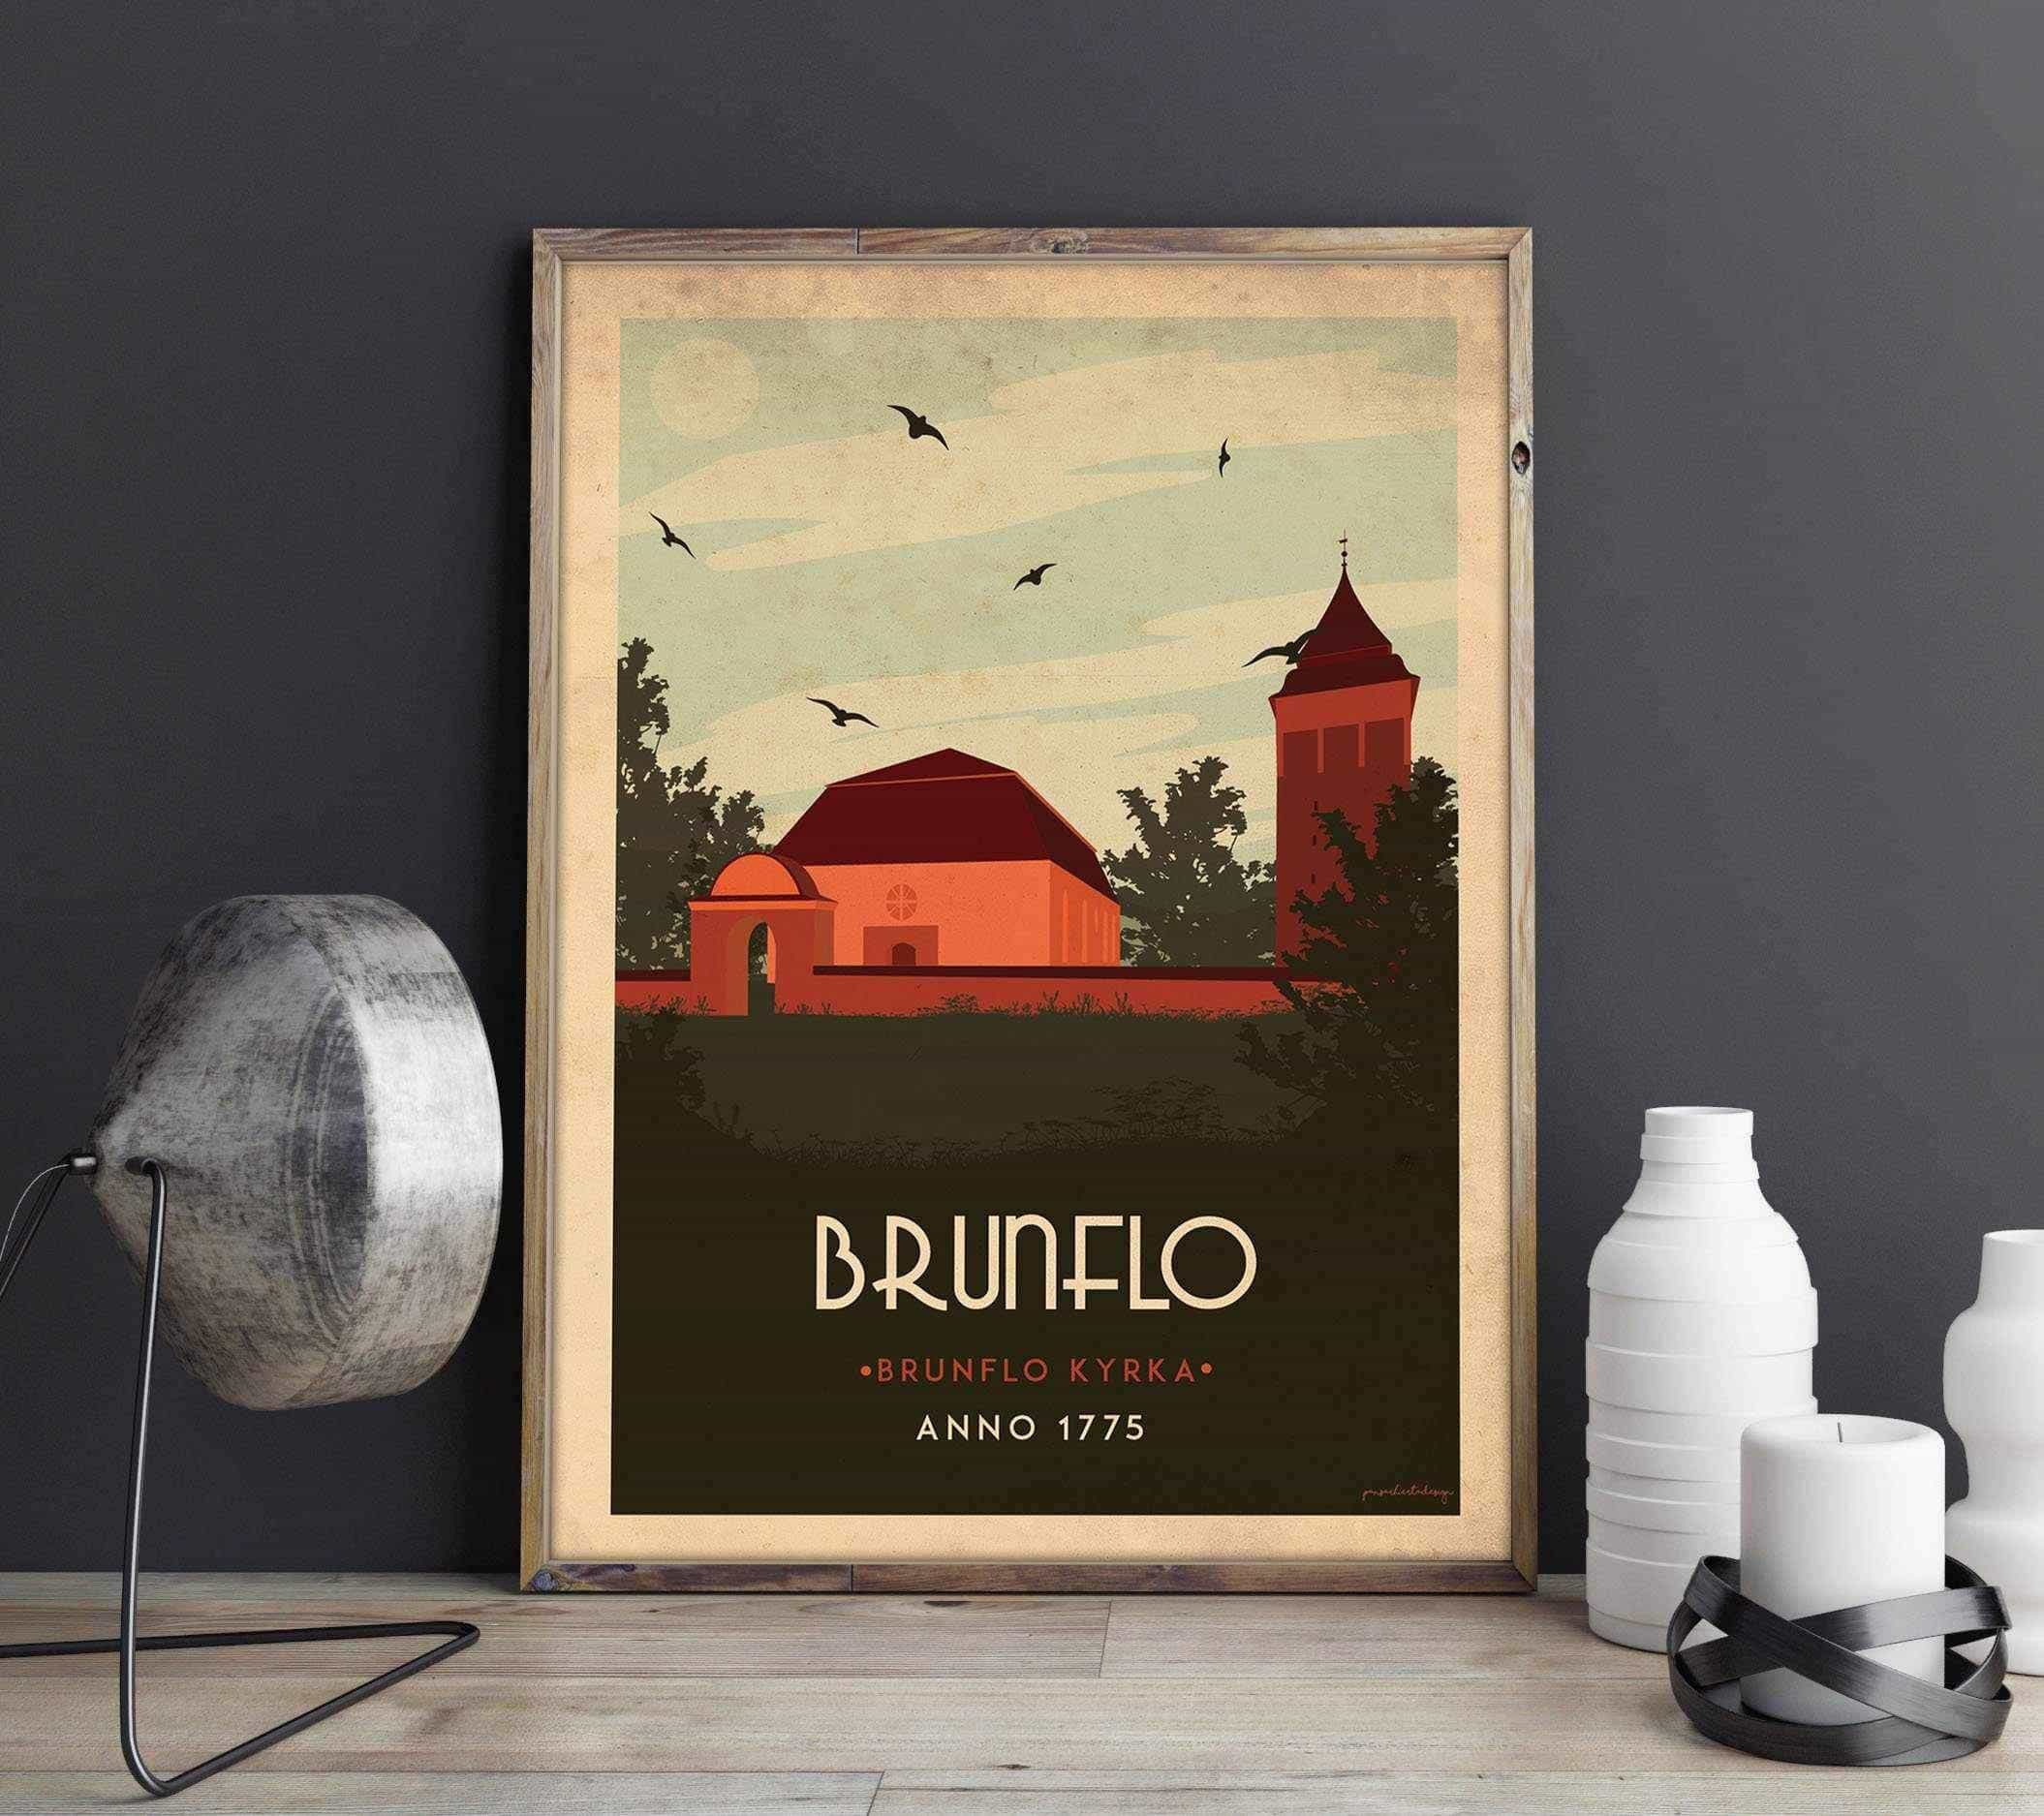 Brunflo - Art deco Posters, affischer, tavlor Pansarhiertadesign